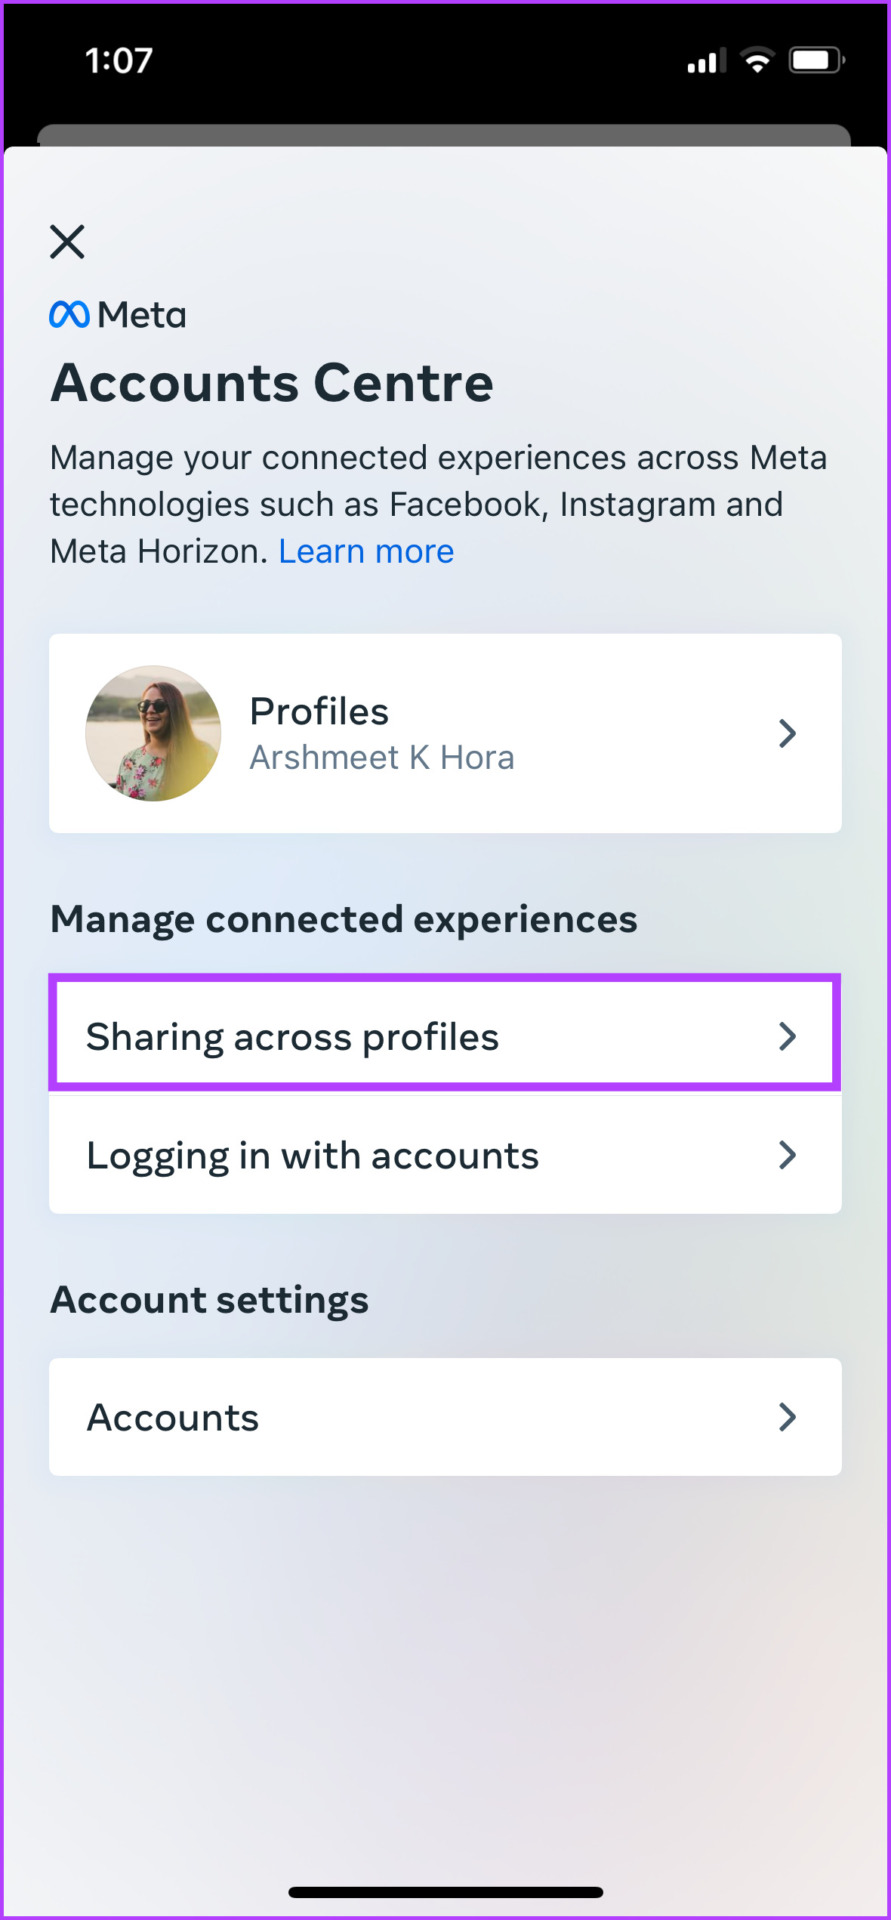 Select Sharing across profiles